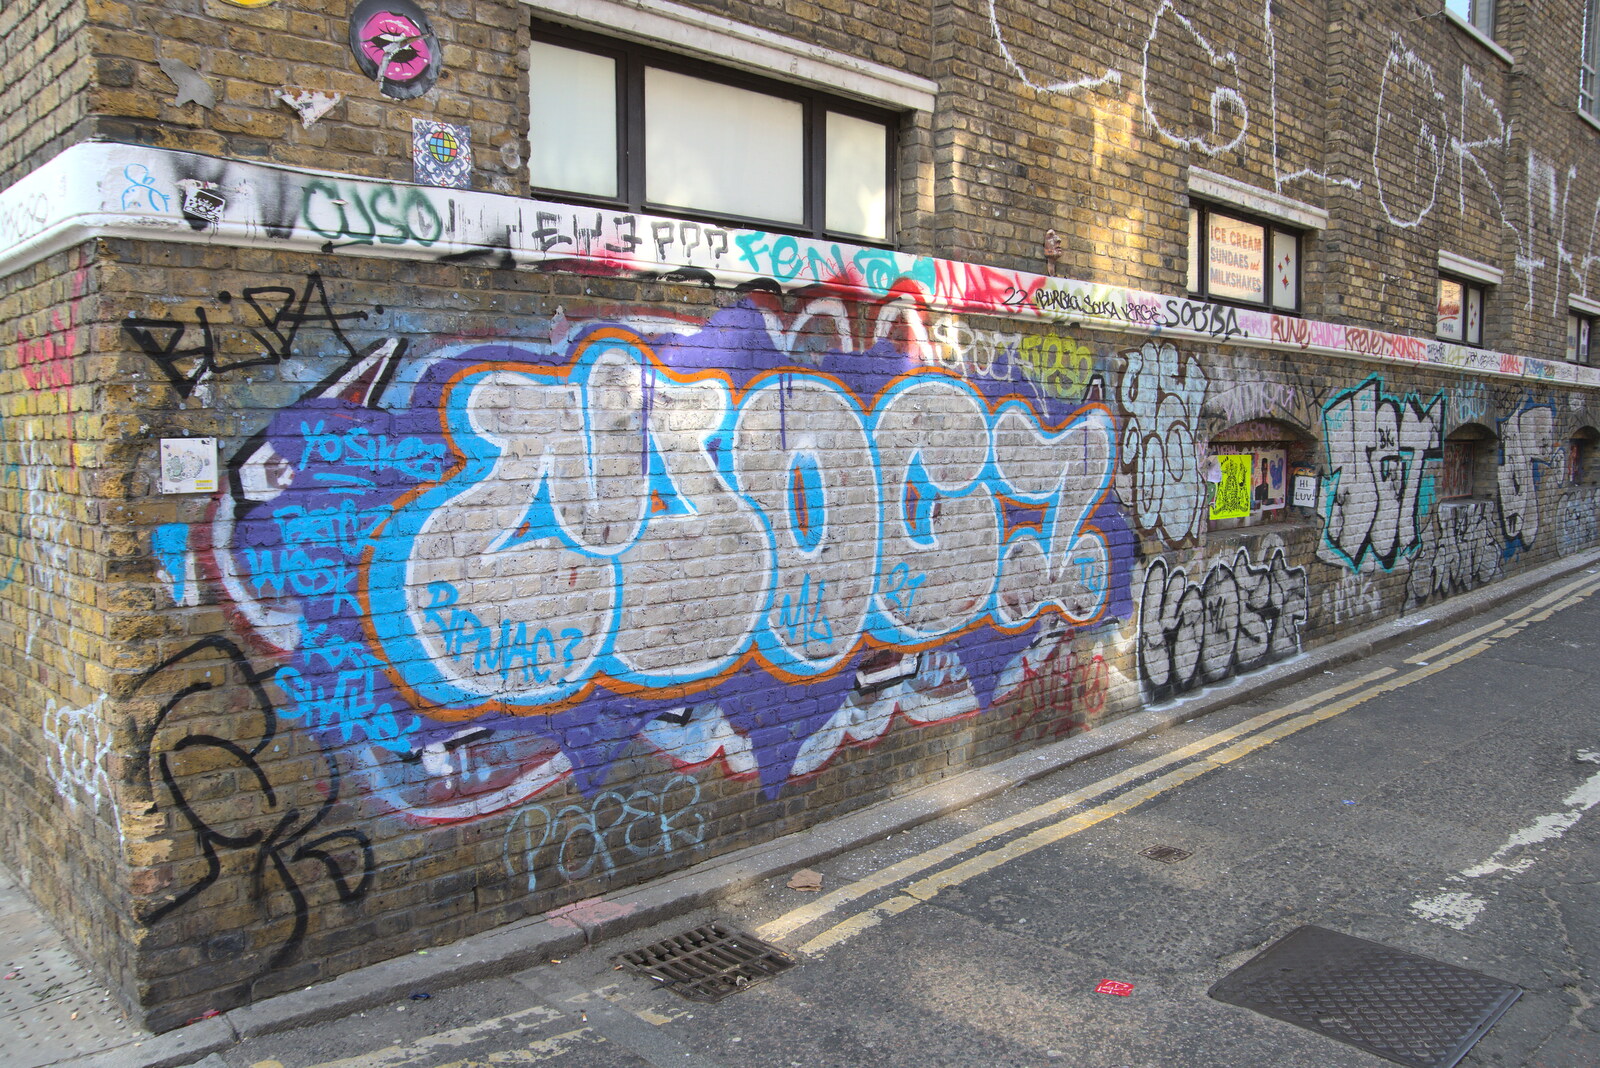 A Walk Around the South Bank, London - 25th March 2022: Graffiti on a brick wall